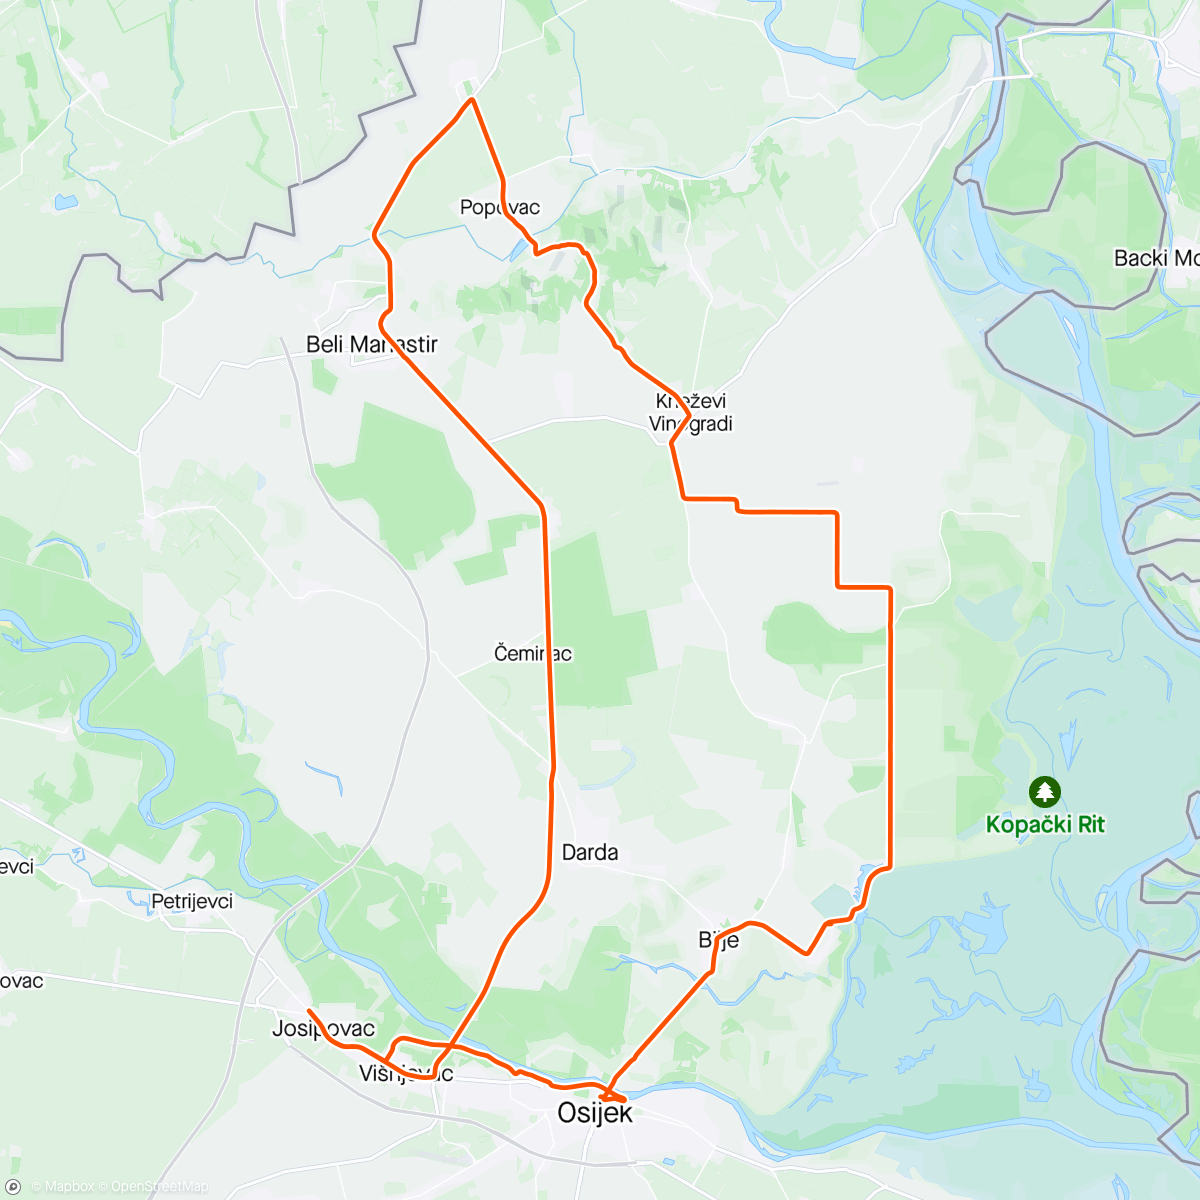 Map of the activity, Beli-Popovac-Kneževi